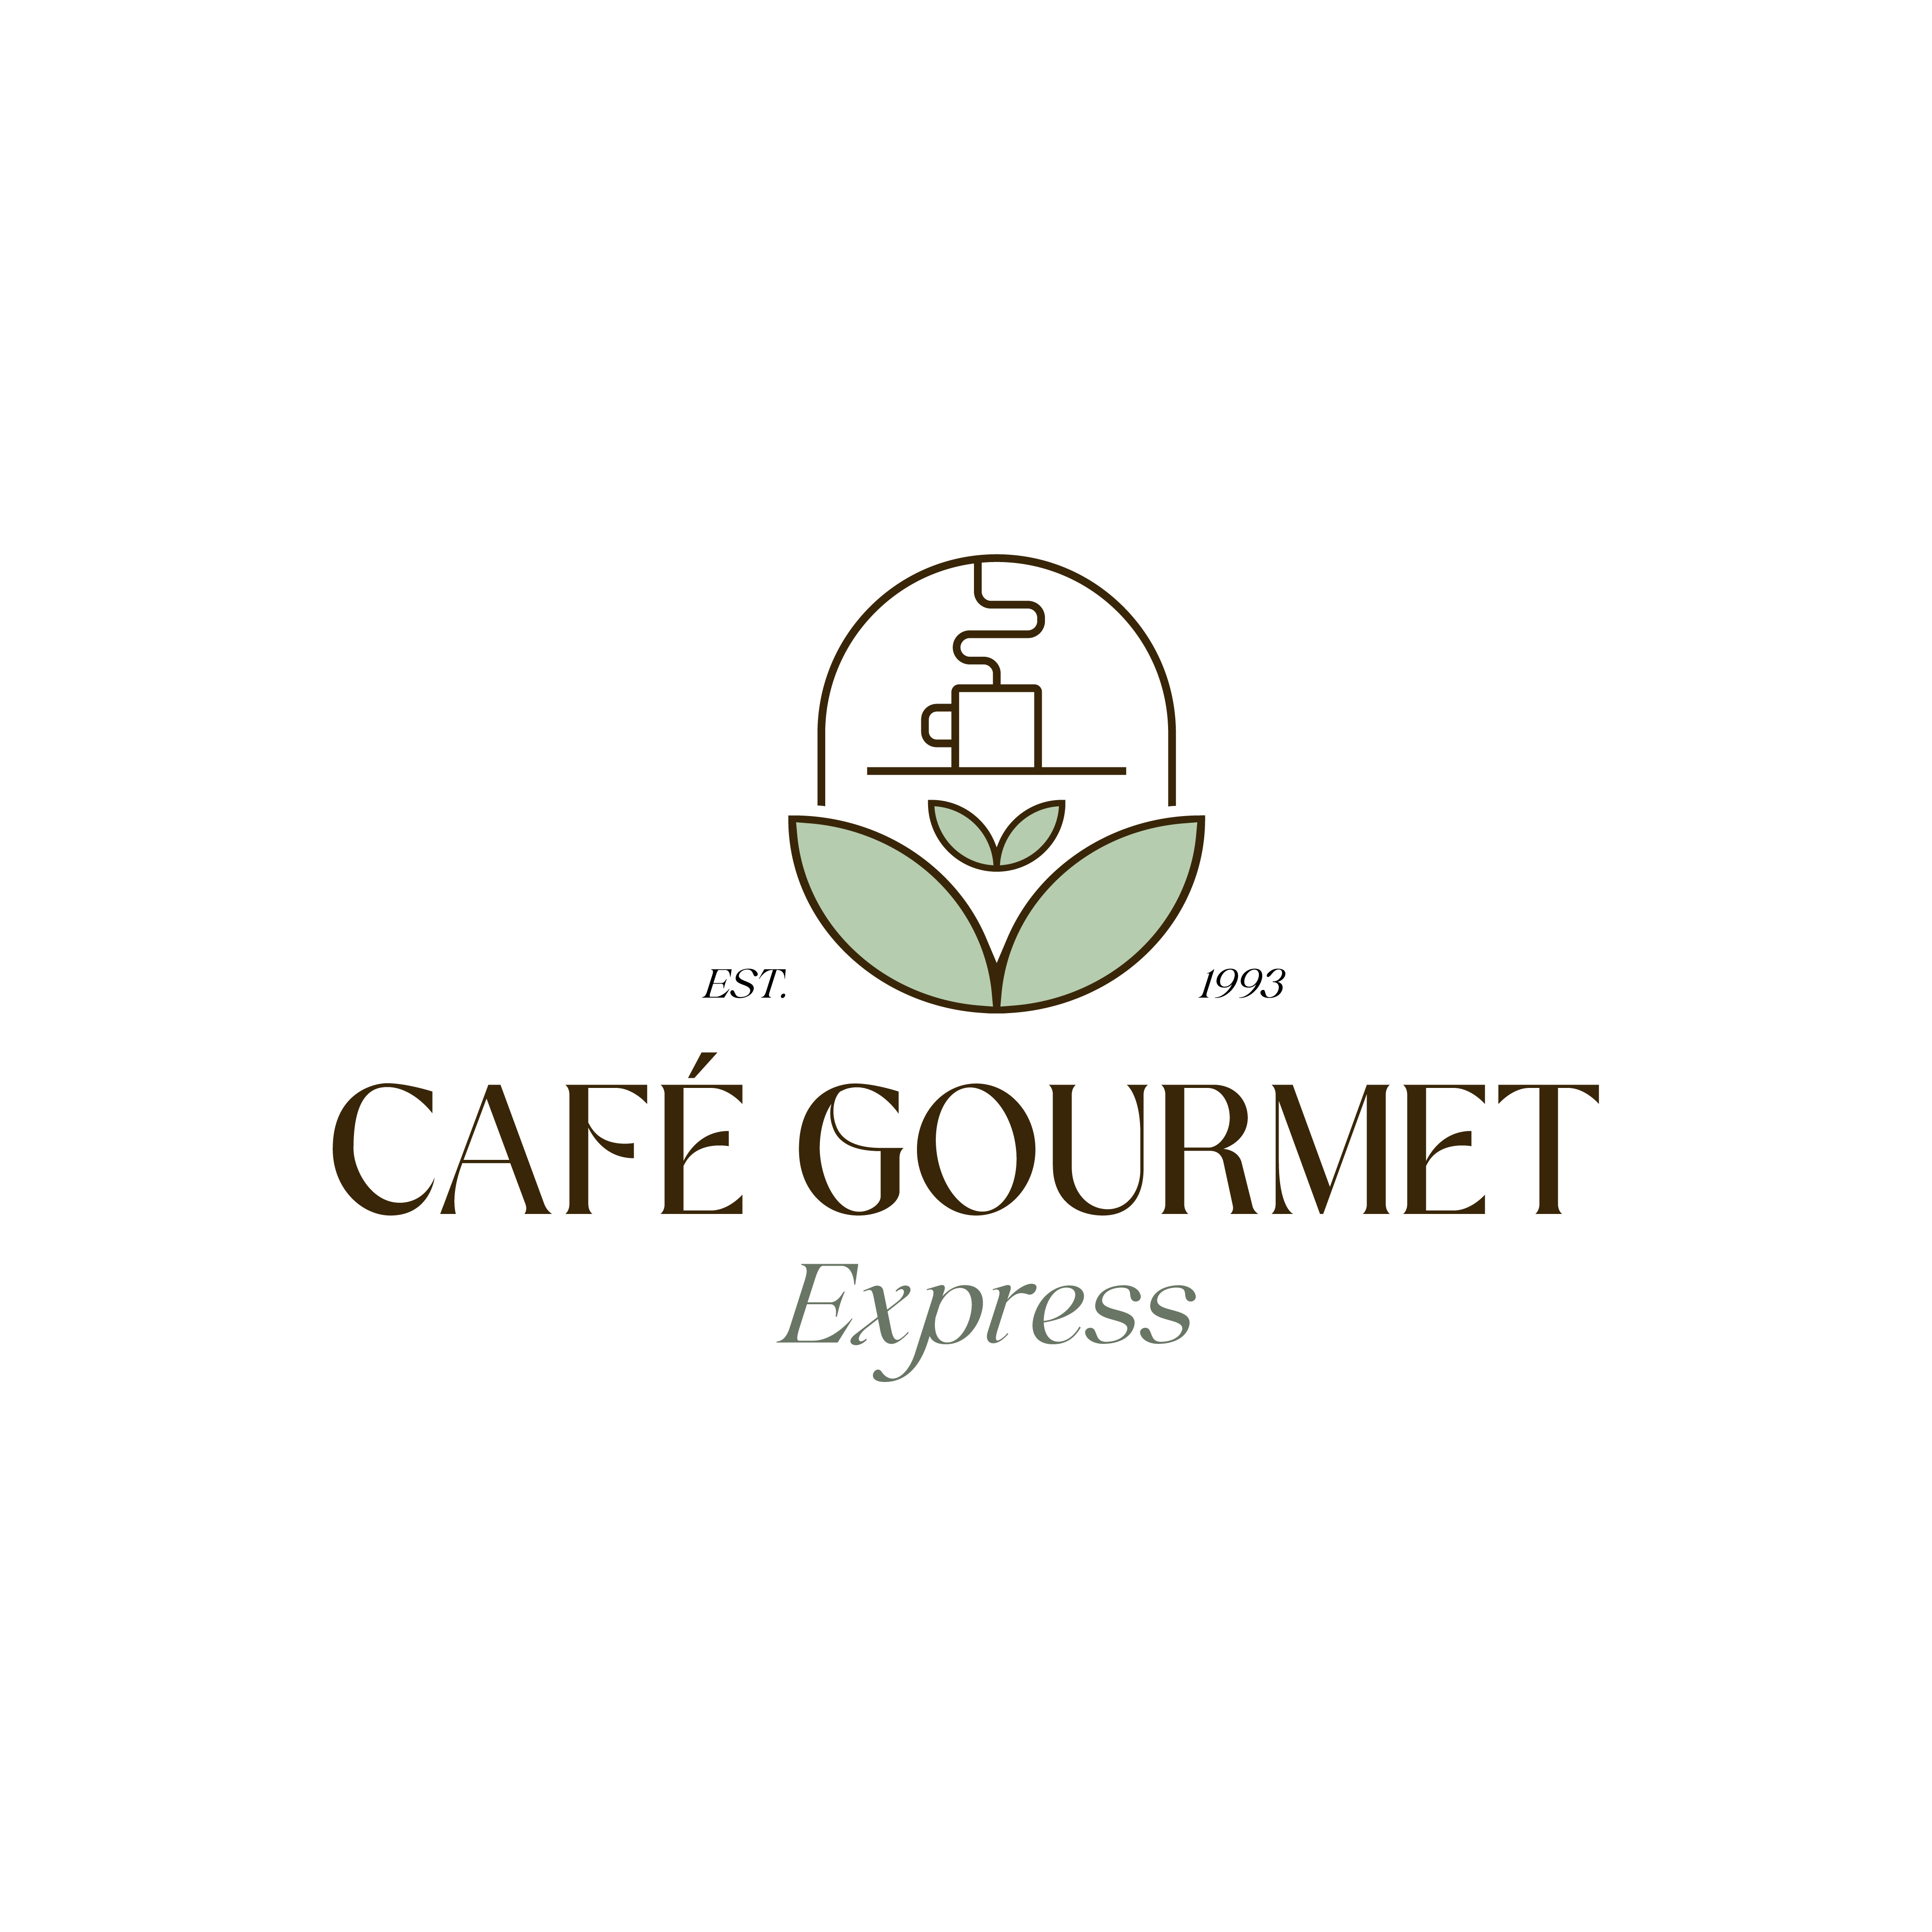 CAFÉ GOURMET EXPRESS